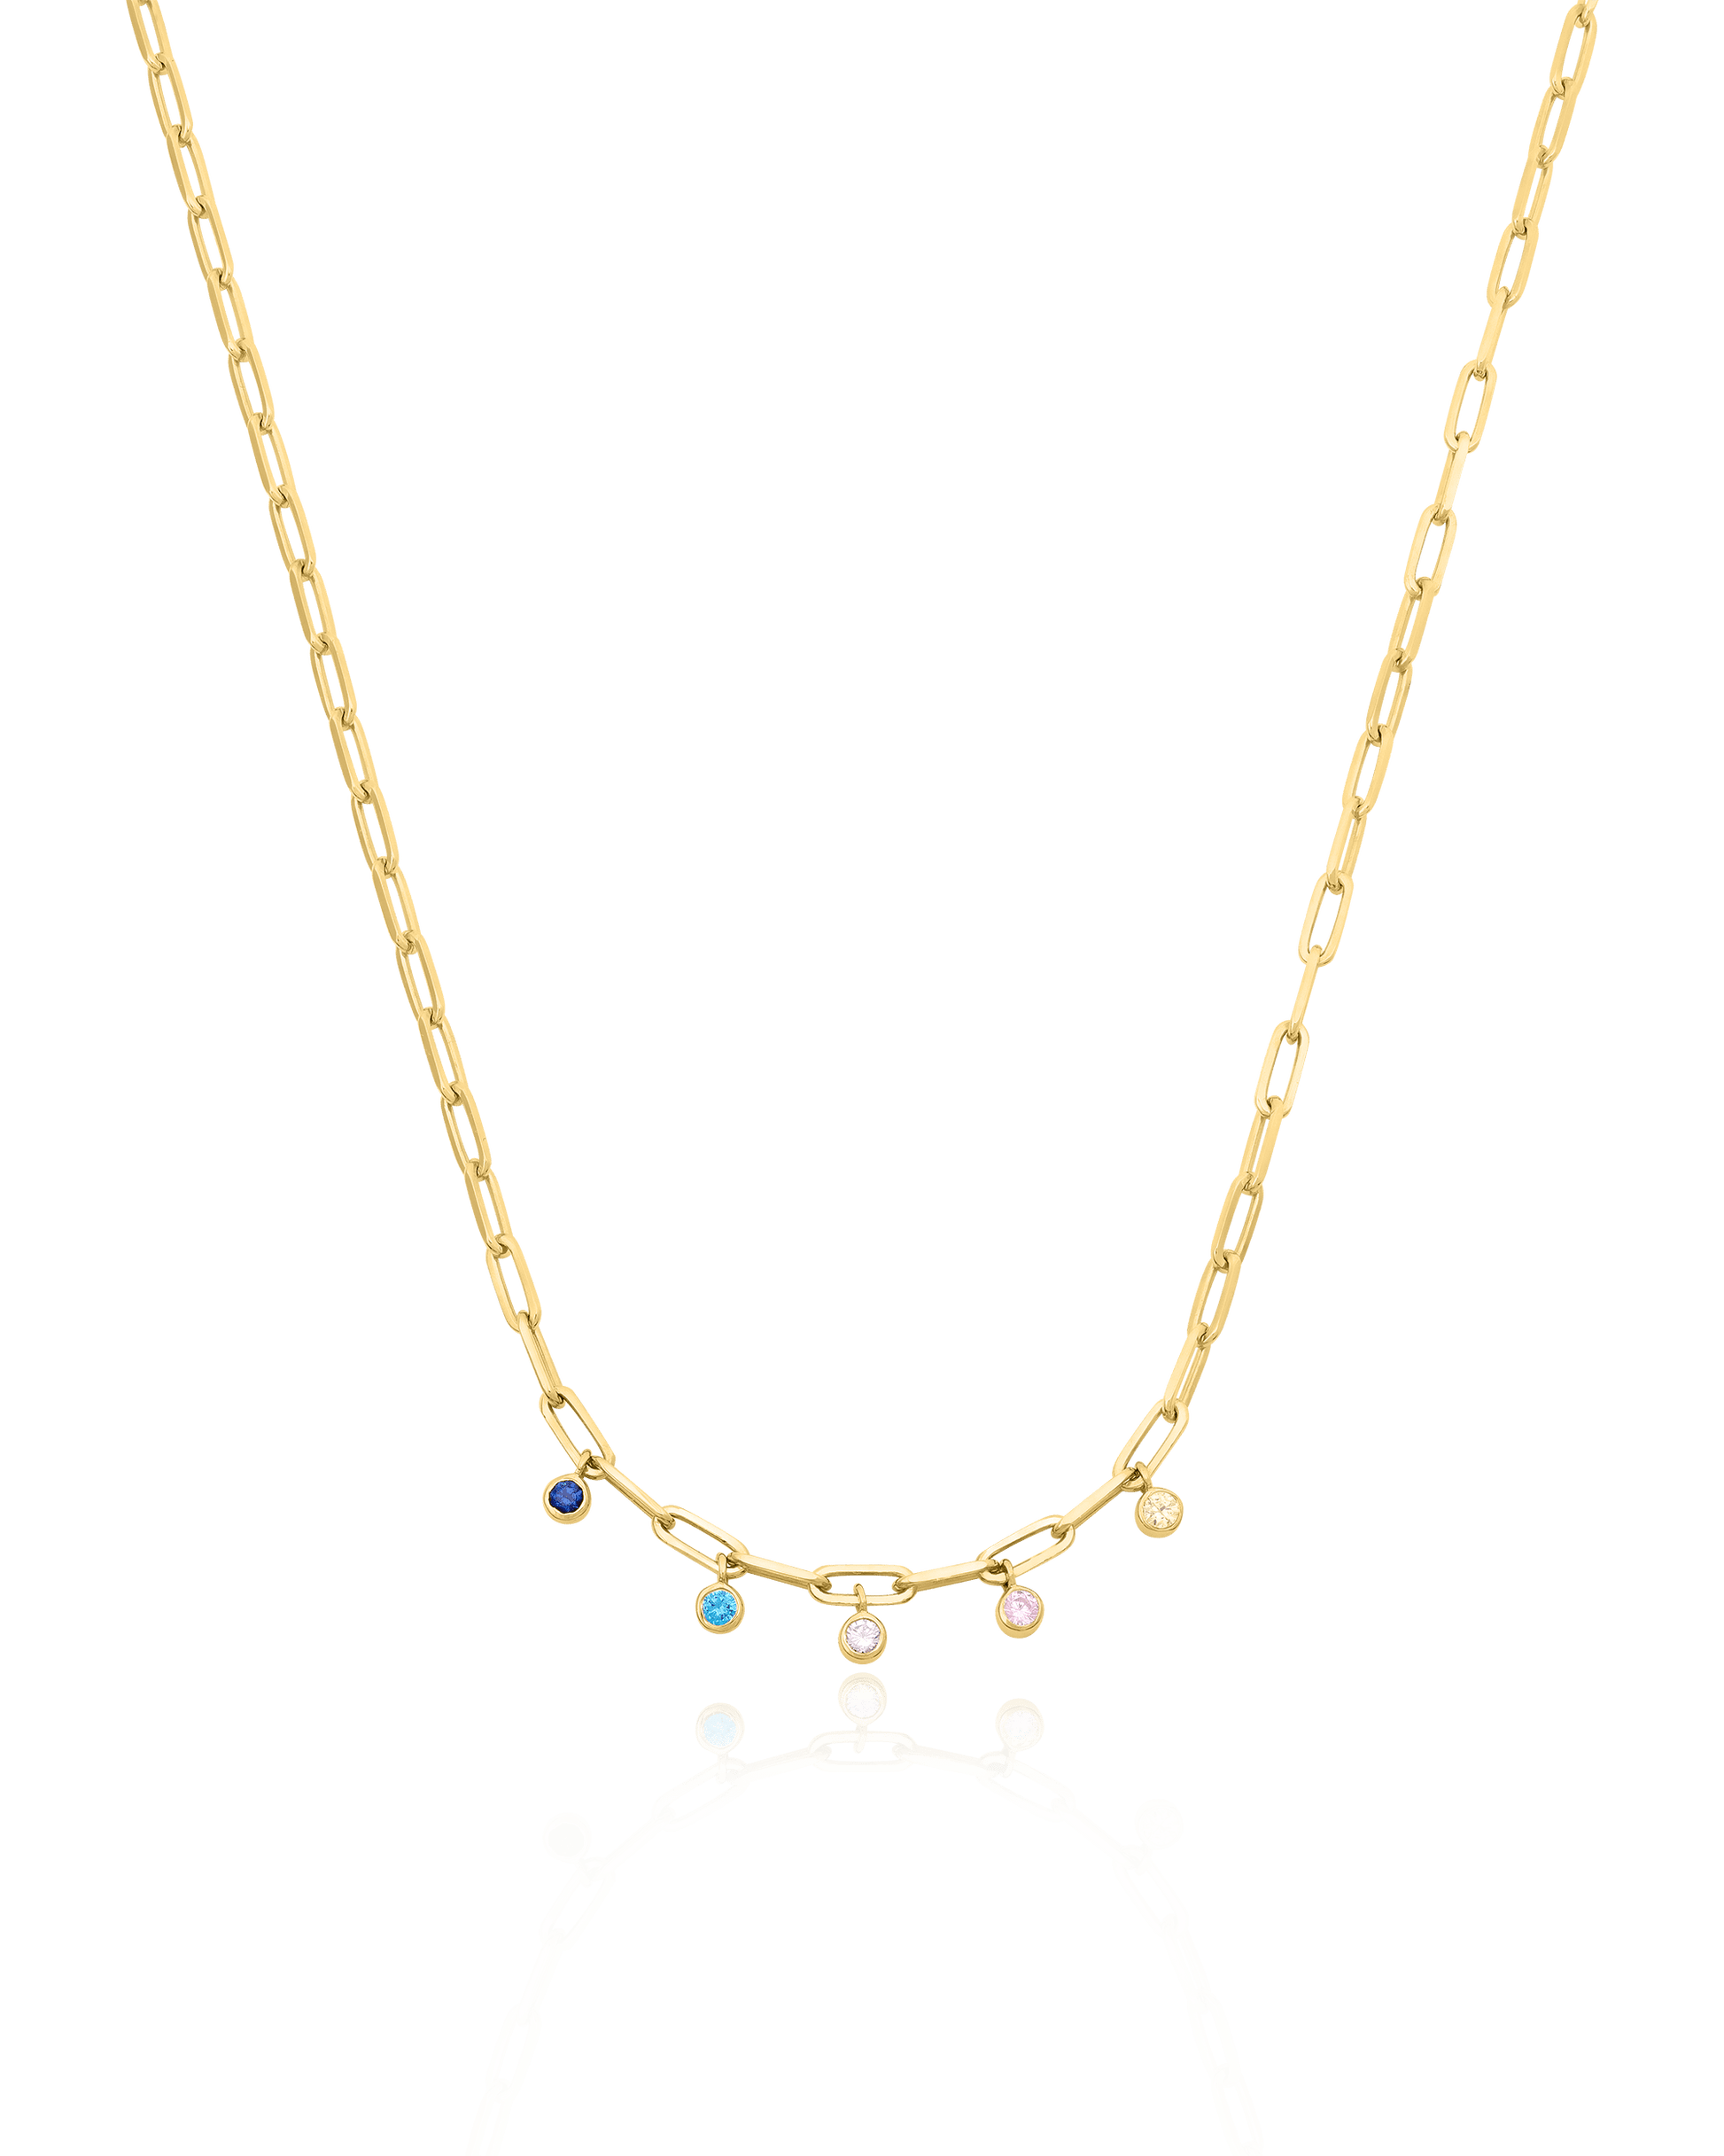 Bermuda Birthstone Necklace - 18K Gold Vermeil Necklaces magal-dev 1 Birthstone 16" 